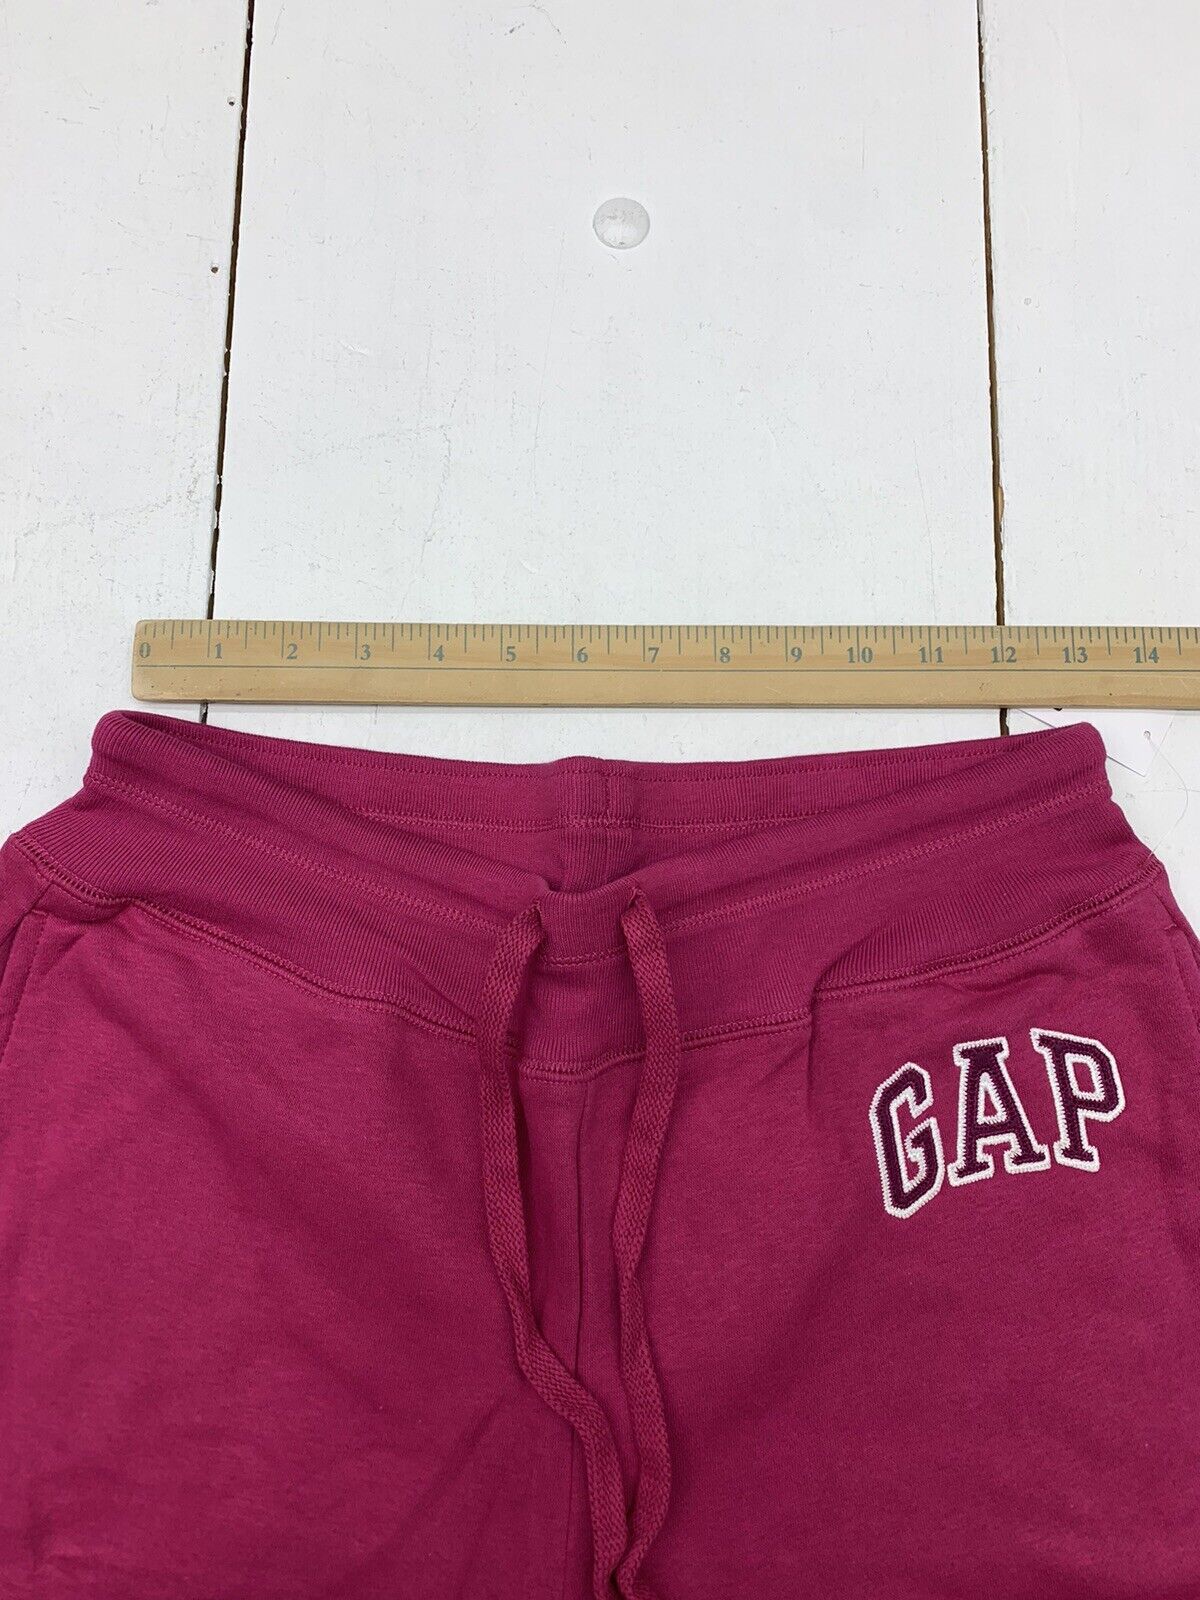 Gap Womens Pink Sweatpants Size Small - beyond exchange